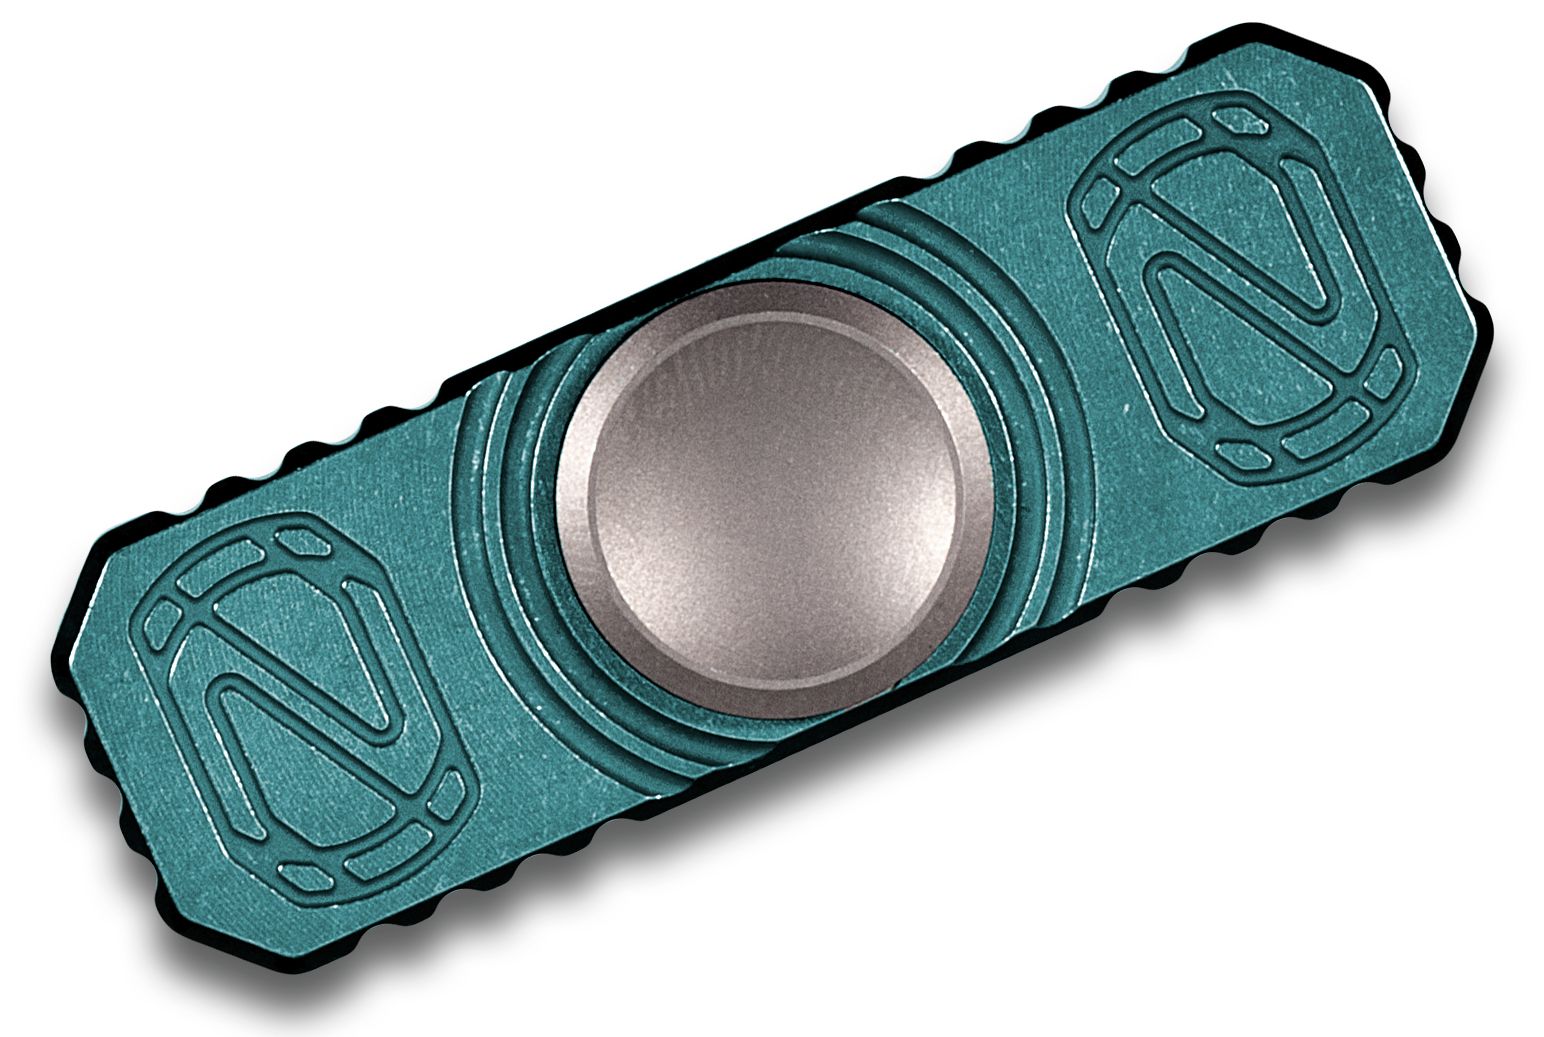 Stedemon Blue Titanium Hand Spinner Top Ceramic Bearing Fidget Toy Z01BLU 